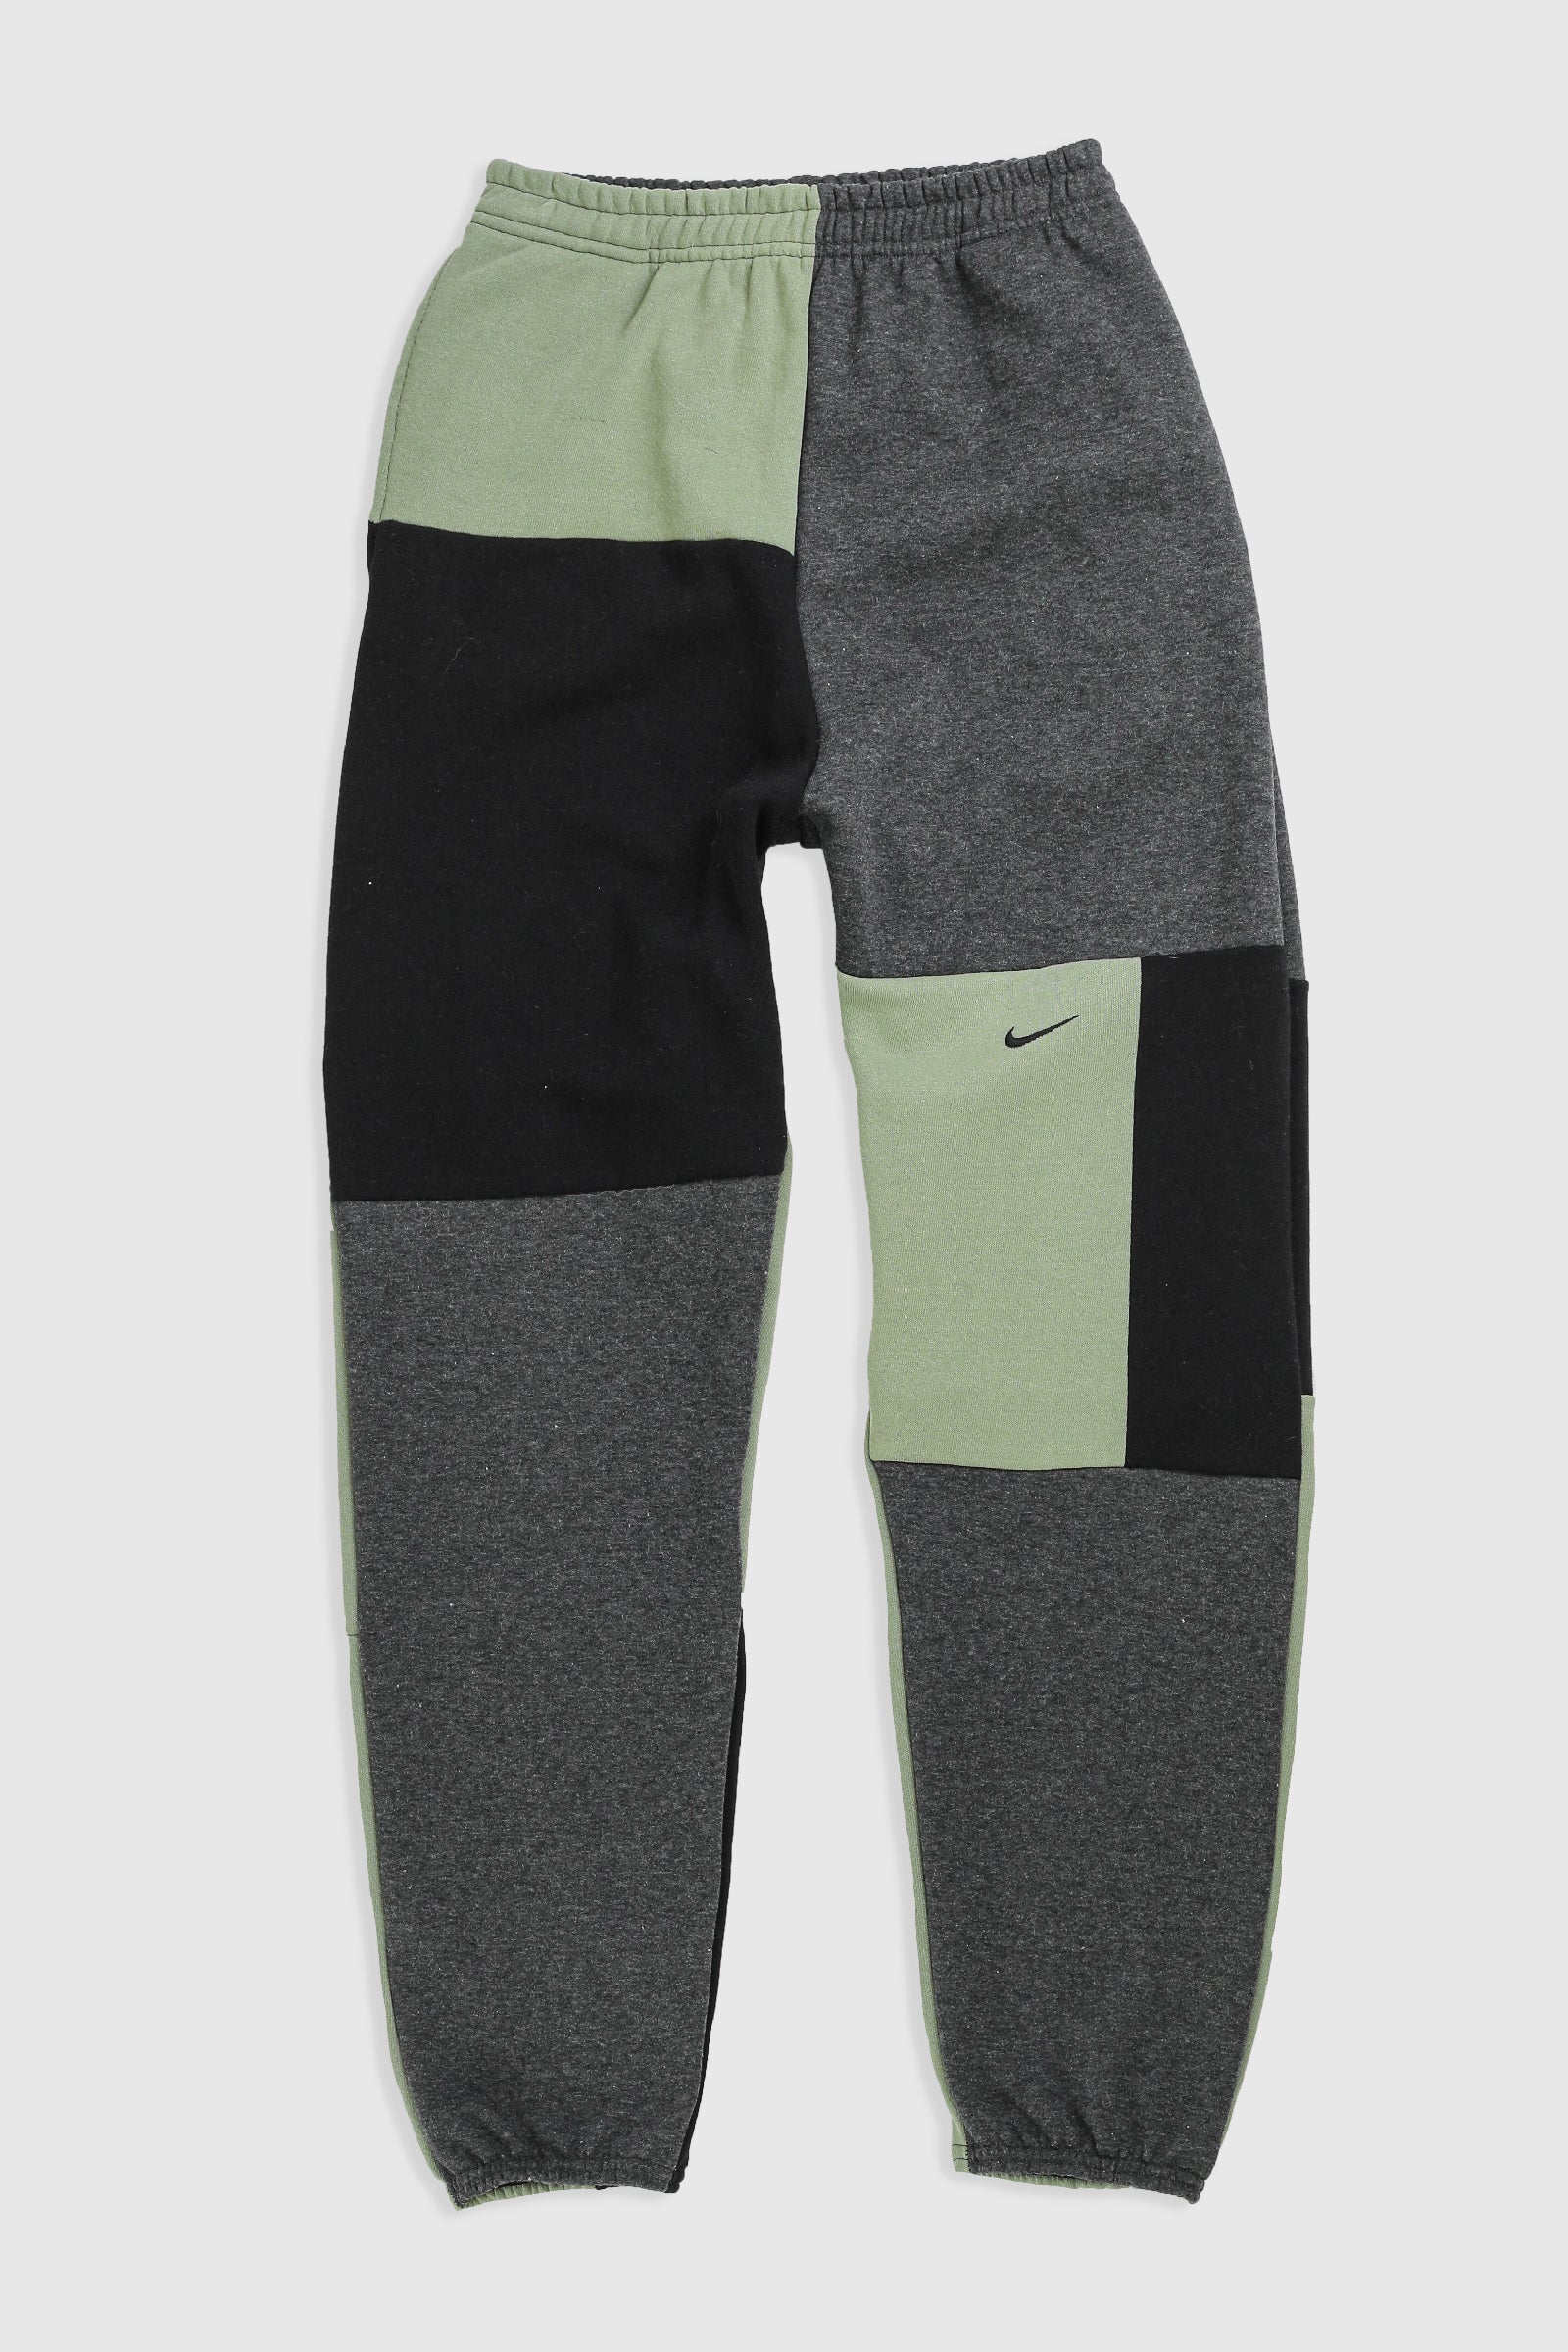 Unisex Rework Nike Patchwork Sweatpants - XS, S, M, L – Frankie Collective